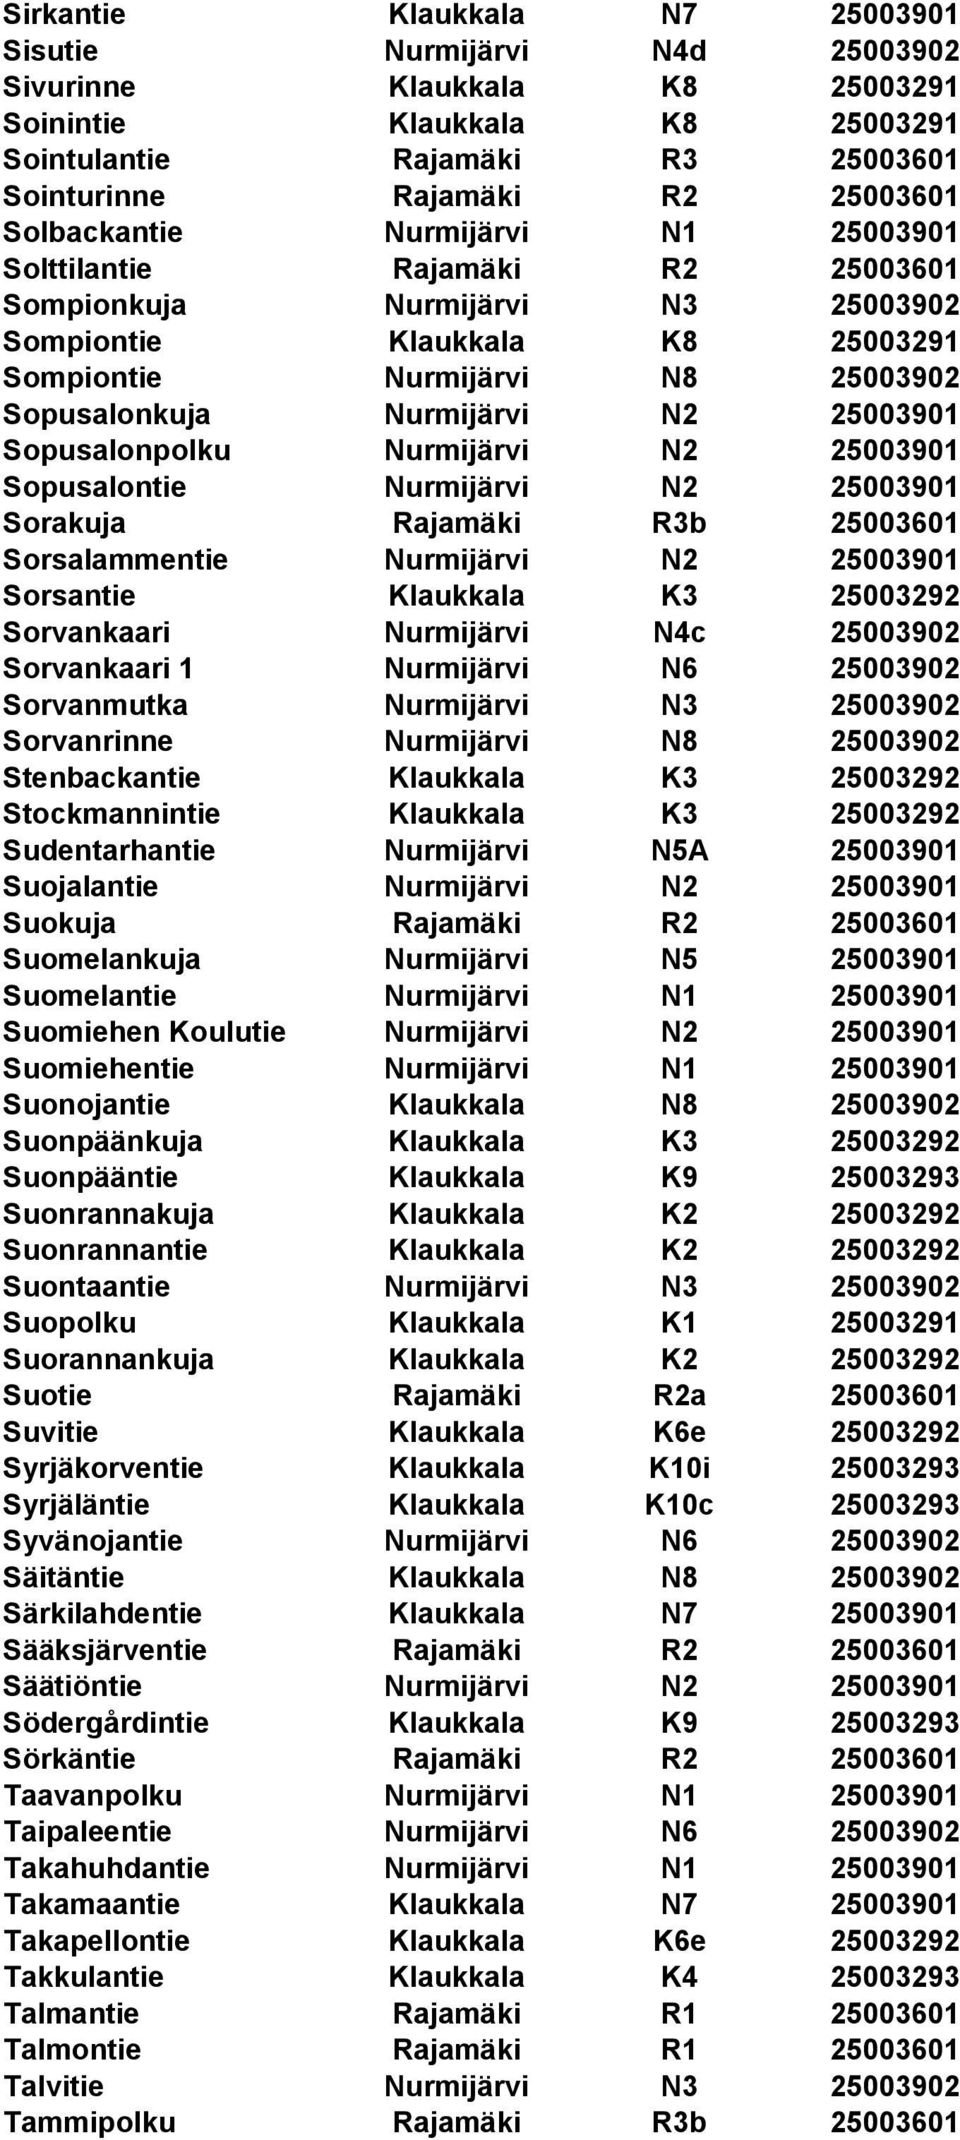 25003901 Sopusalonpolku Nurmijärvi N2 25003901 Sopusalontie Nurmijärvi N2 25003901 Sorakuja Rajamäki R3b 25003601 Sorsalammentie Nurmijärvi N2 25003901 Sorsantie Klaukkala K3 25003292 Sorvankaari